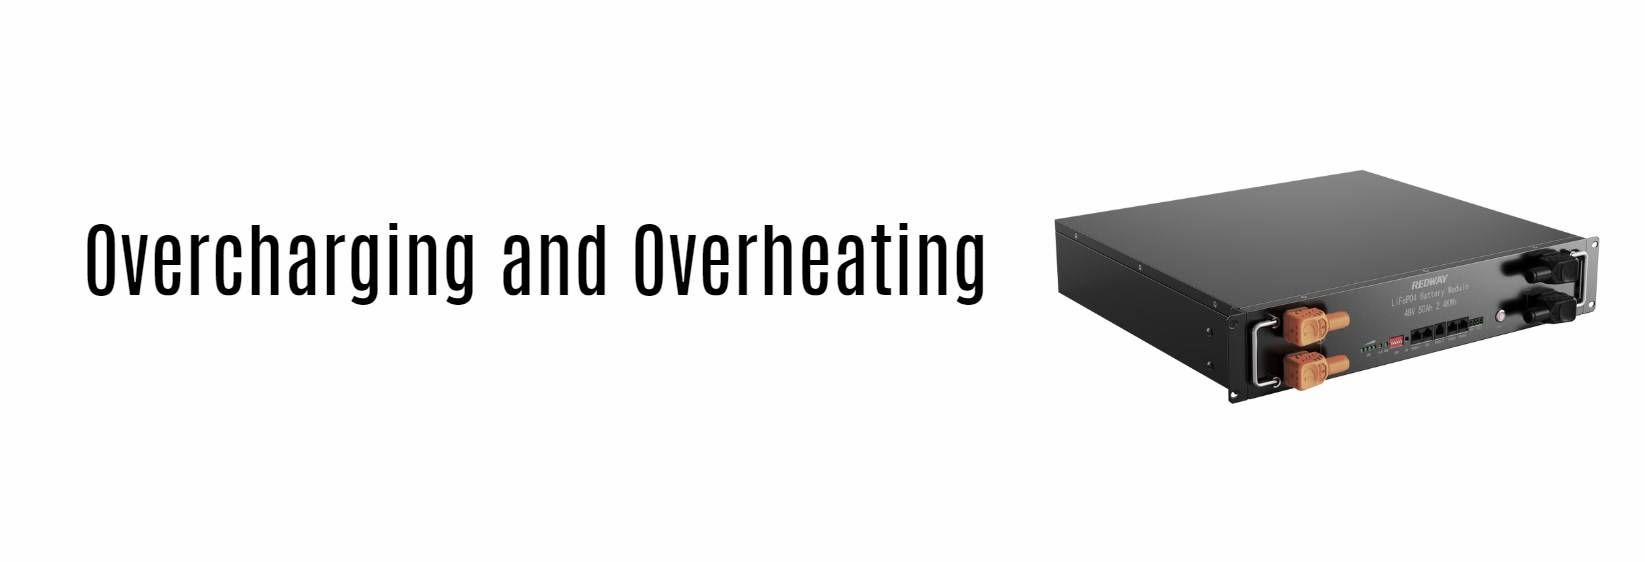 Overcharging and Overheating. server rack battery 51.2v 50ah redway